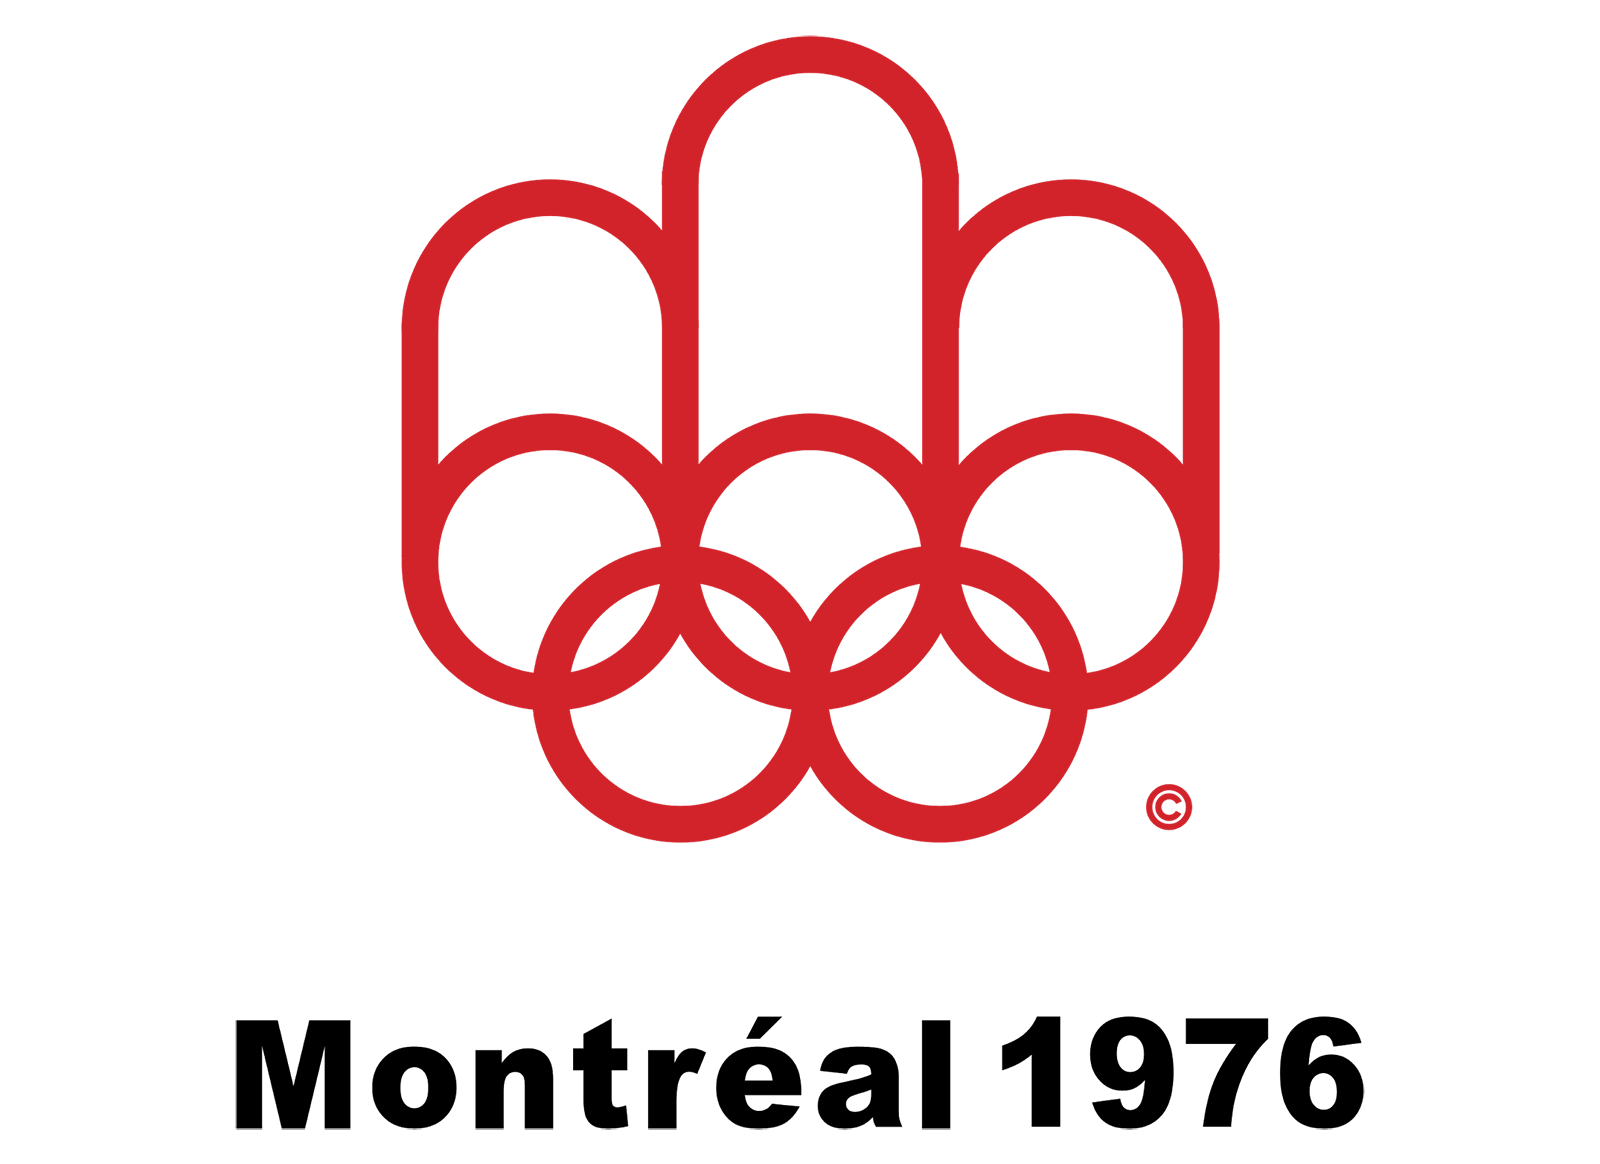 Montreal – Summer Olympics 1976